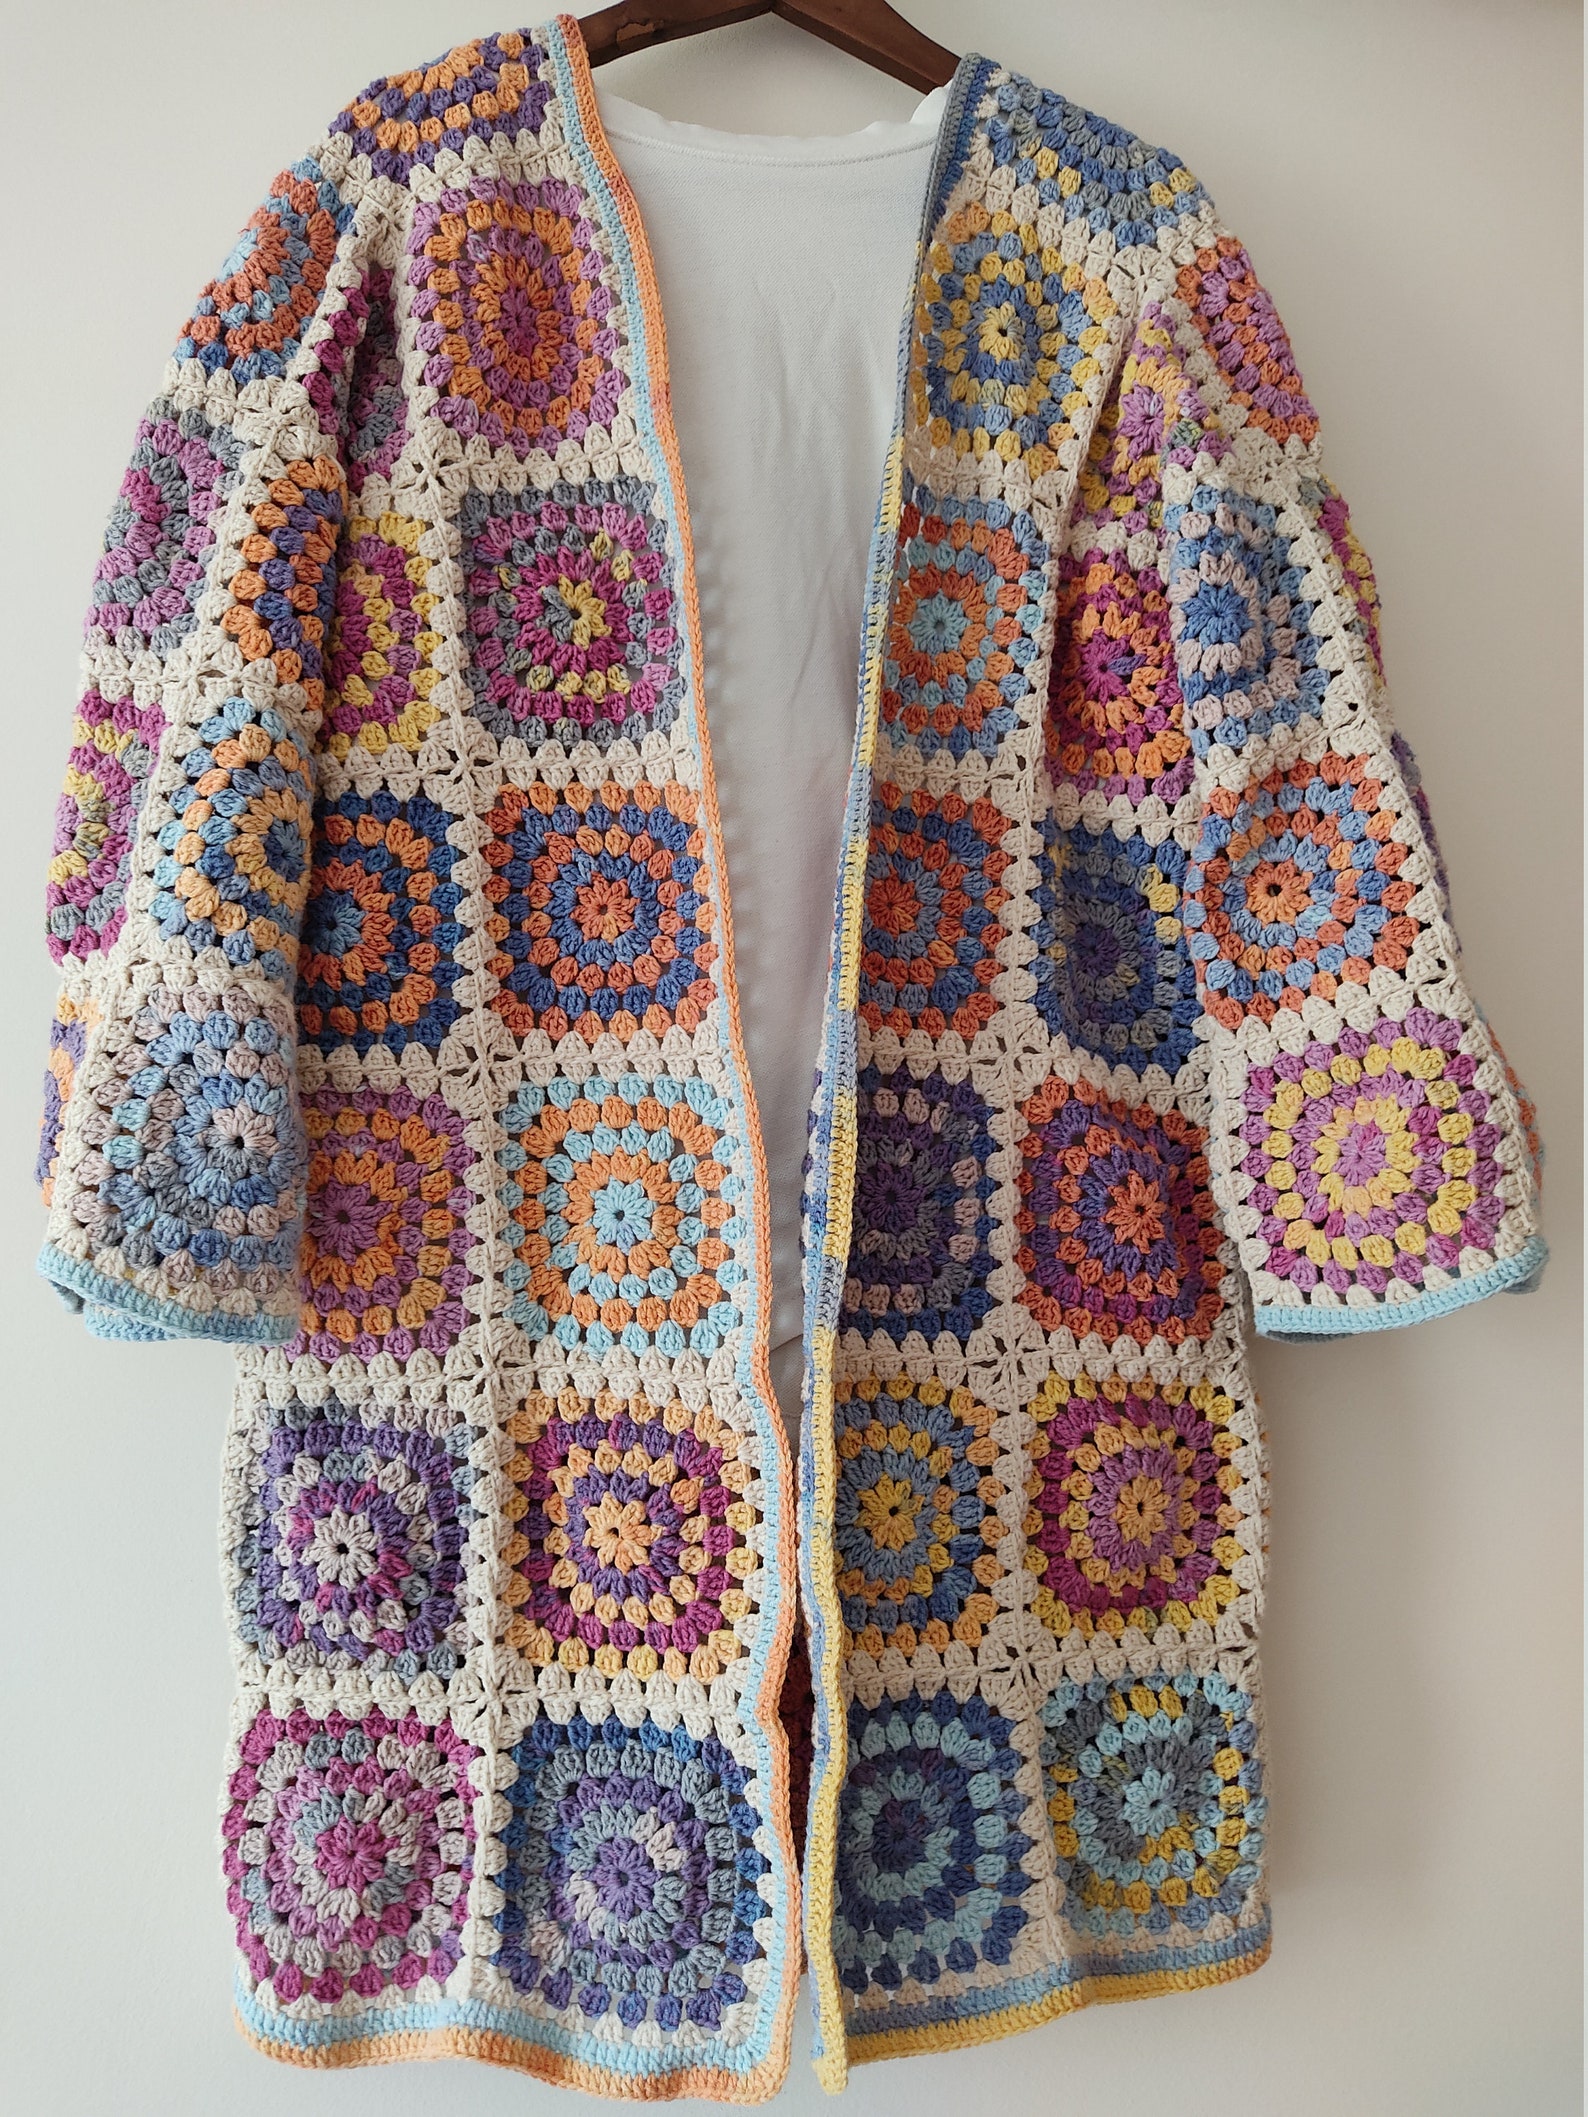 Granny Square Crochet Cardiganbohemianafghan Sweater - Etsy